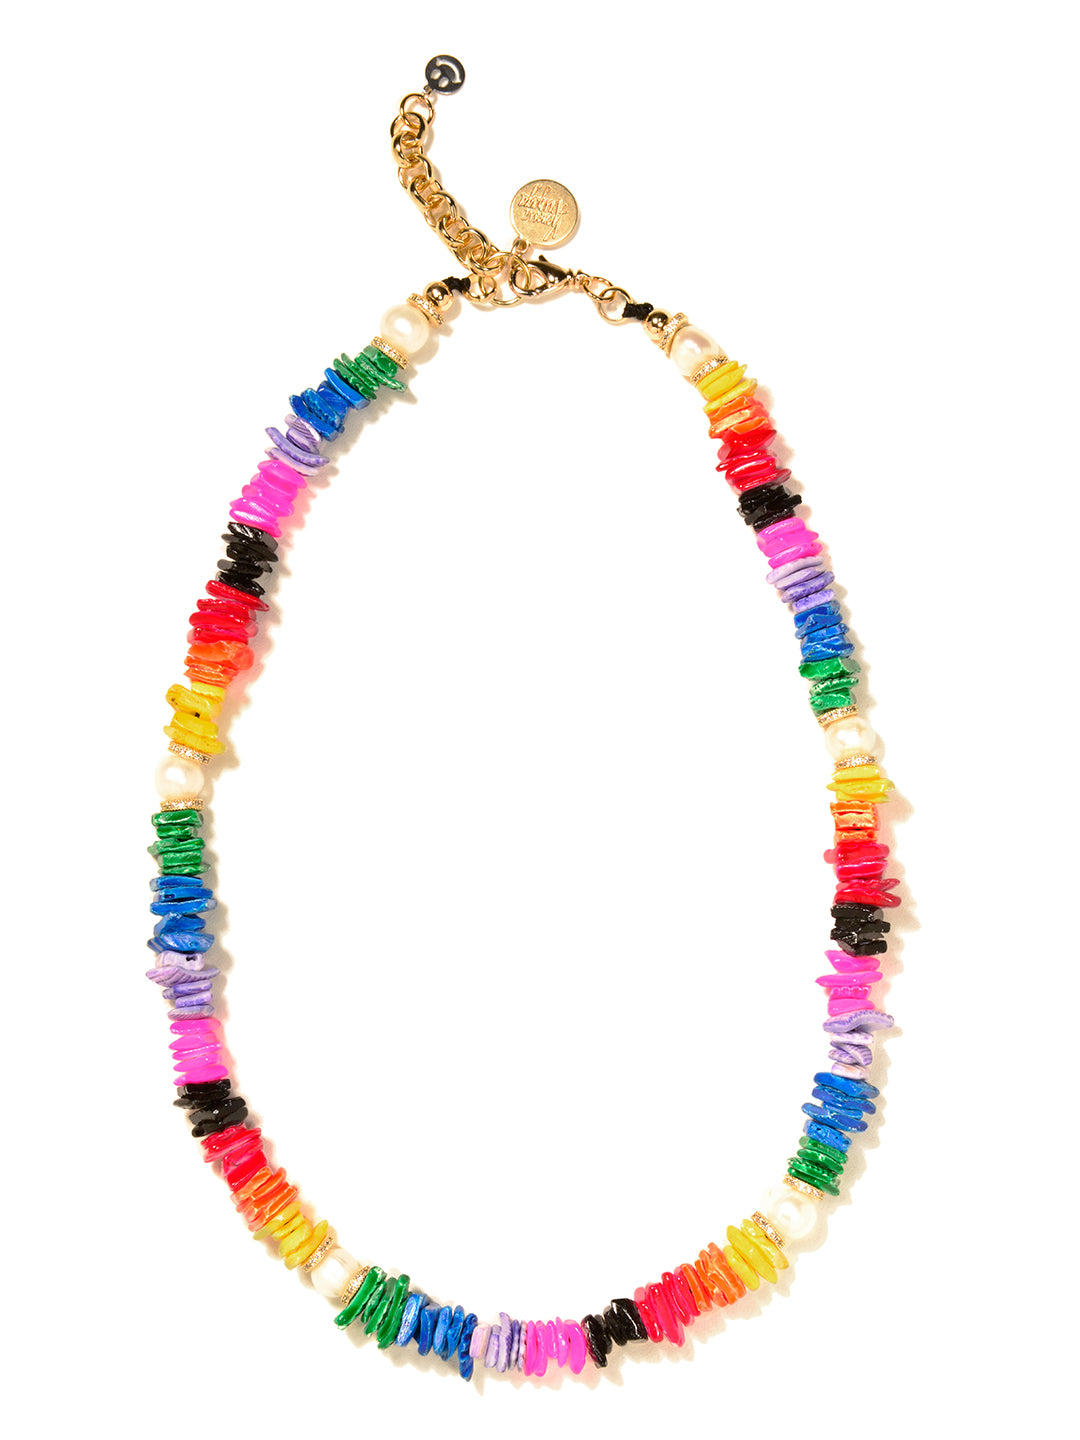 Neon Puka Shell Chip Necklace Yellow Orange Colorful Beach Ocean Jewelry  17” | eBay